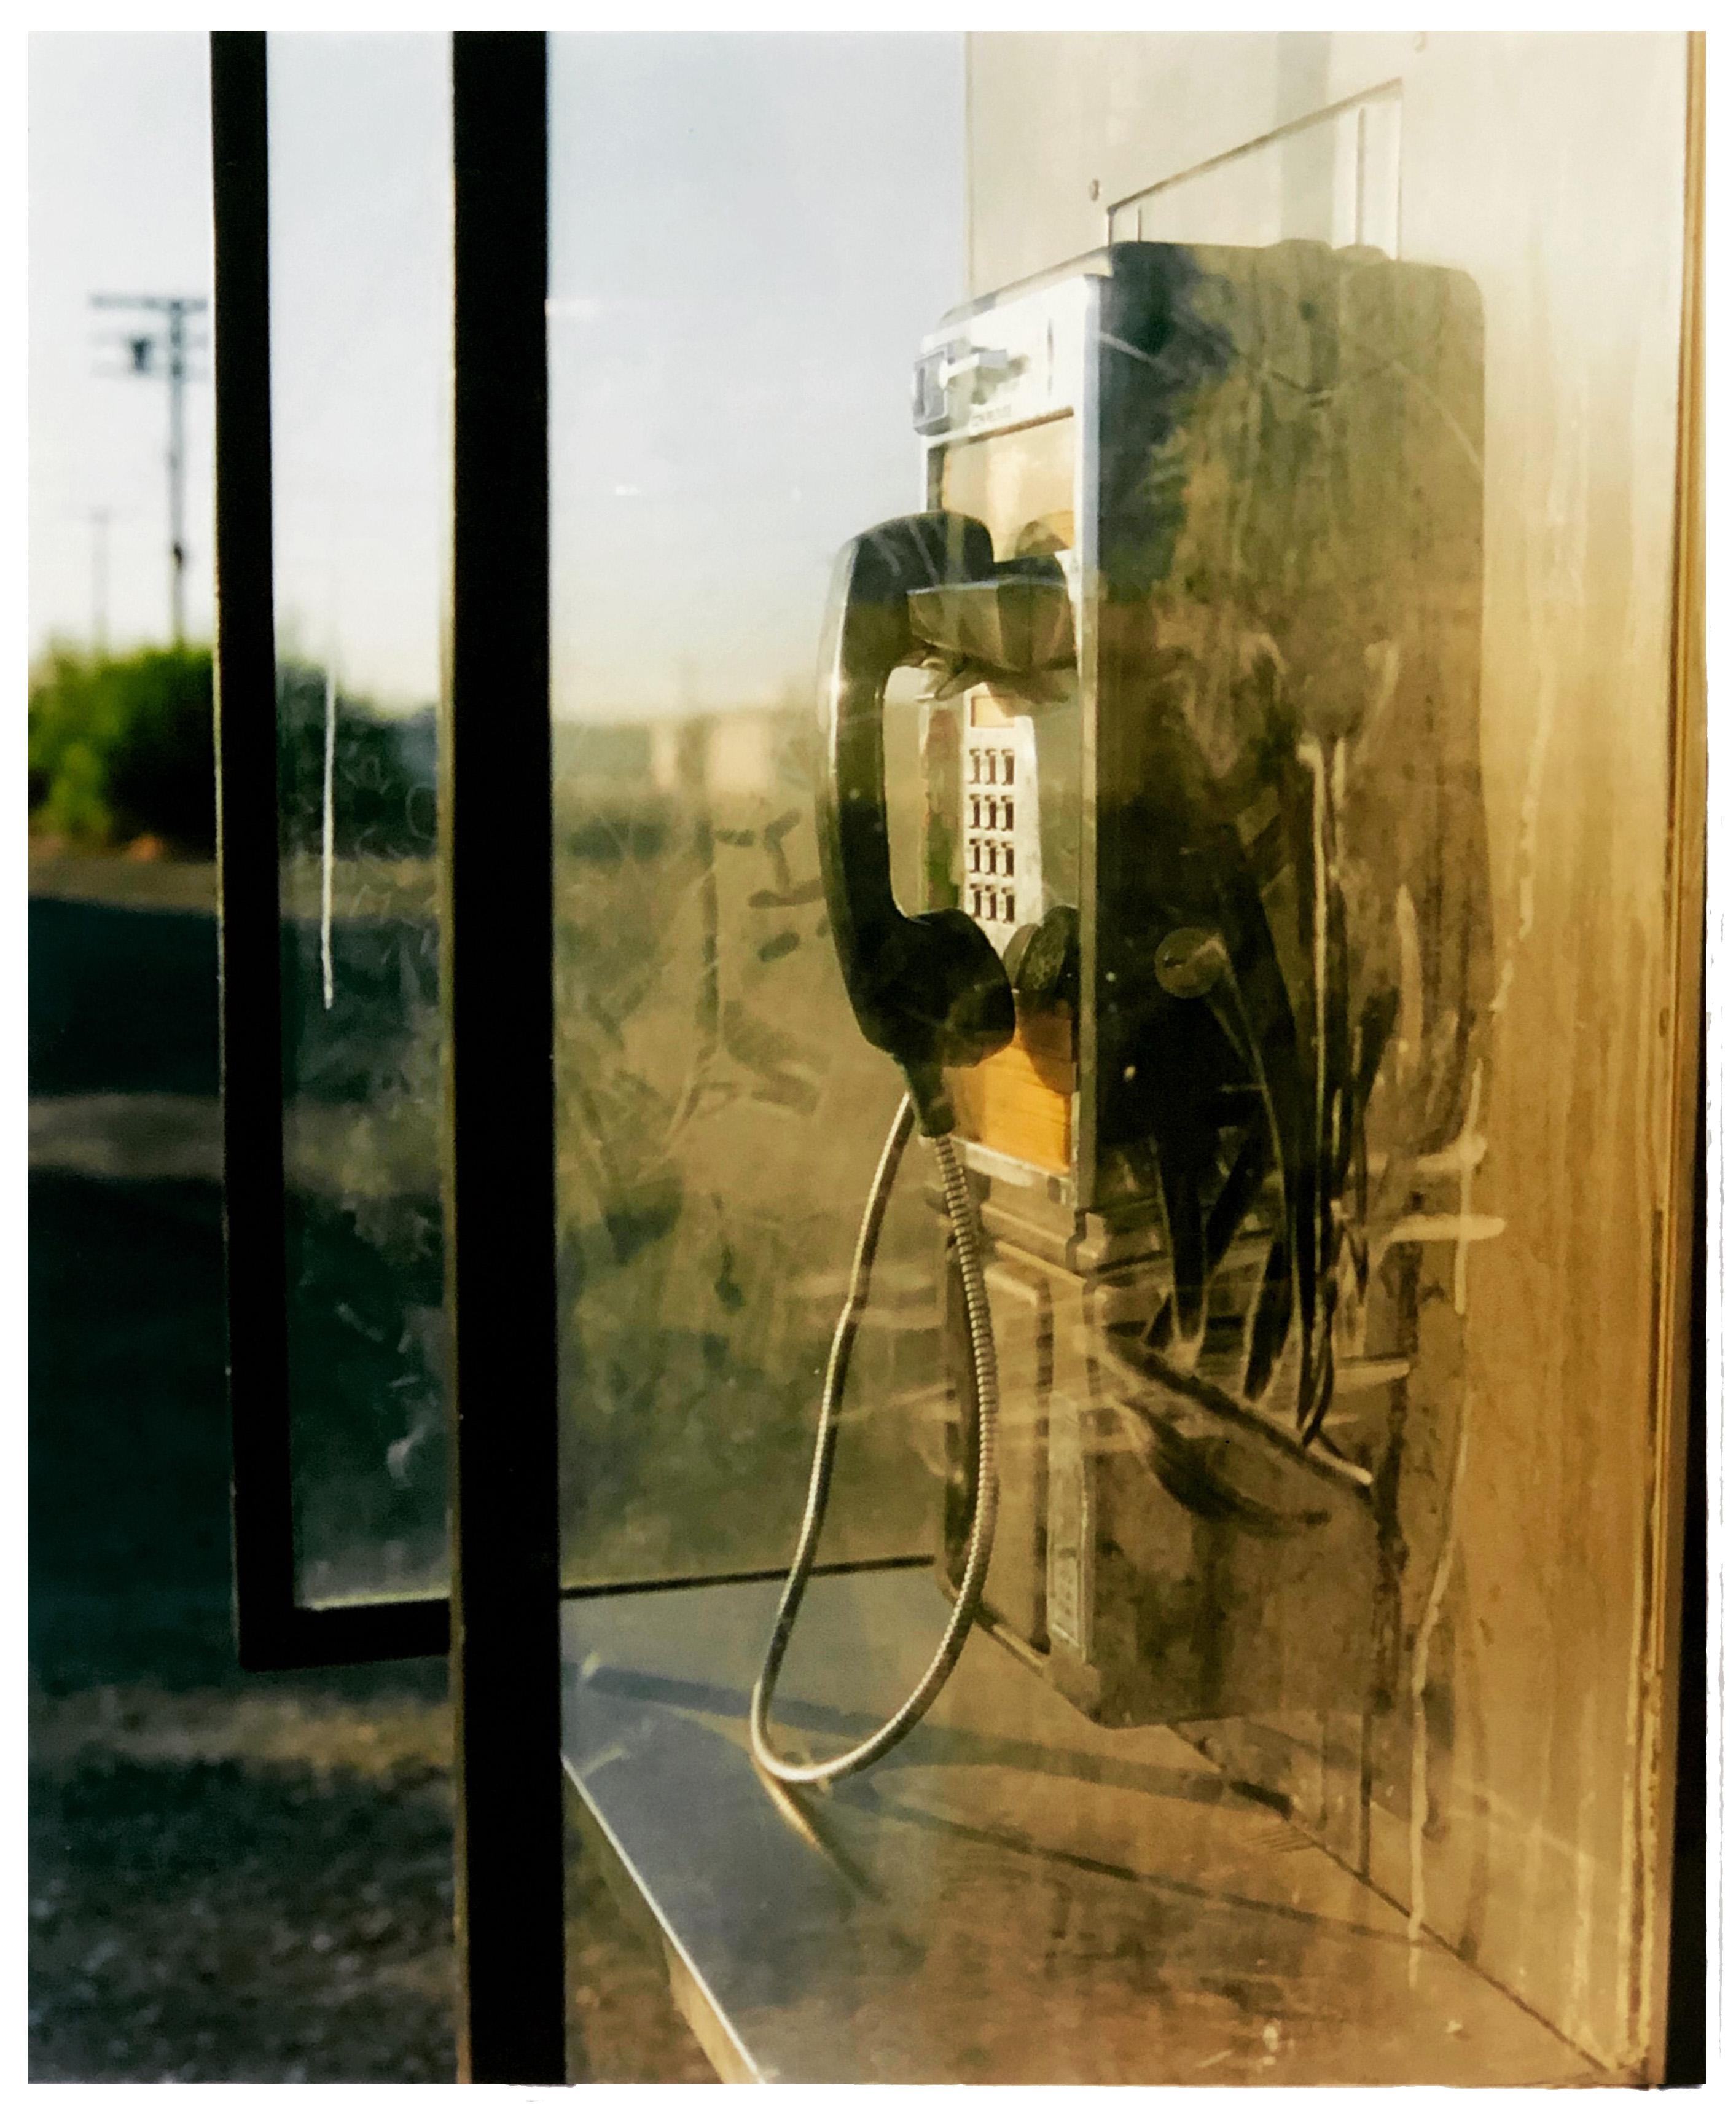 Richard Heeps Print – Call Box, Salton City, Kalifornien – amerikanische Farbfotografie